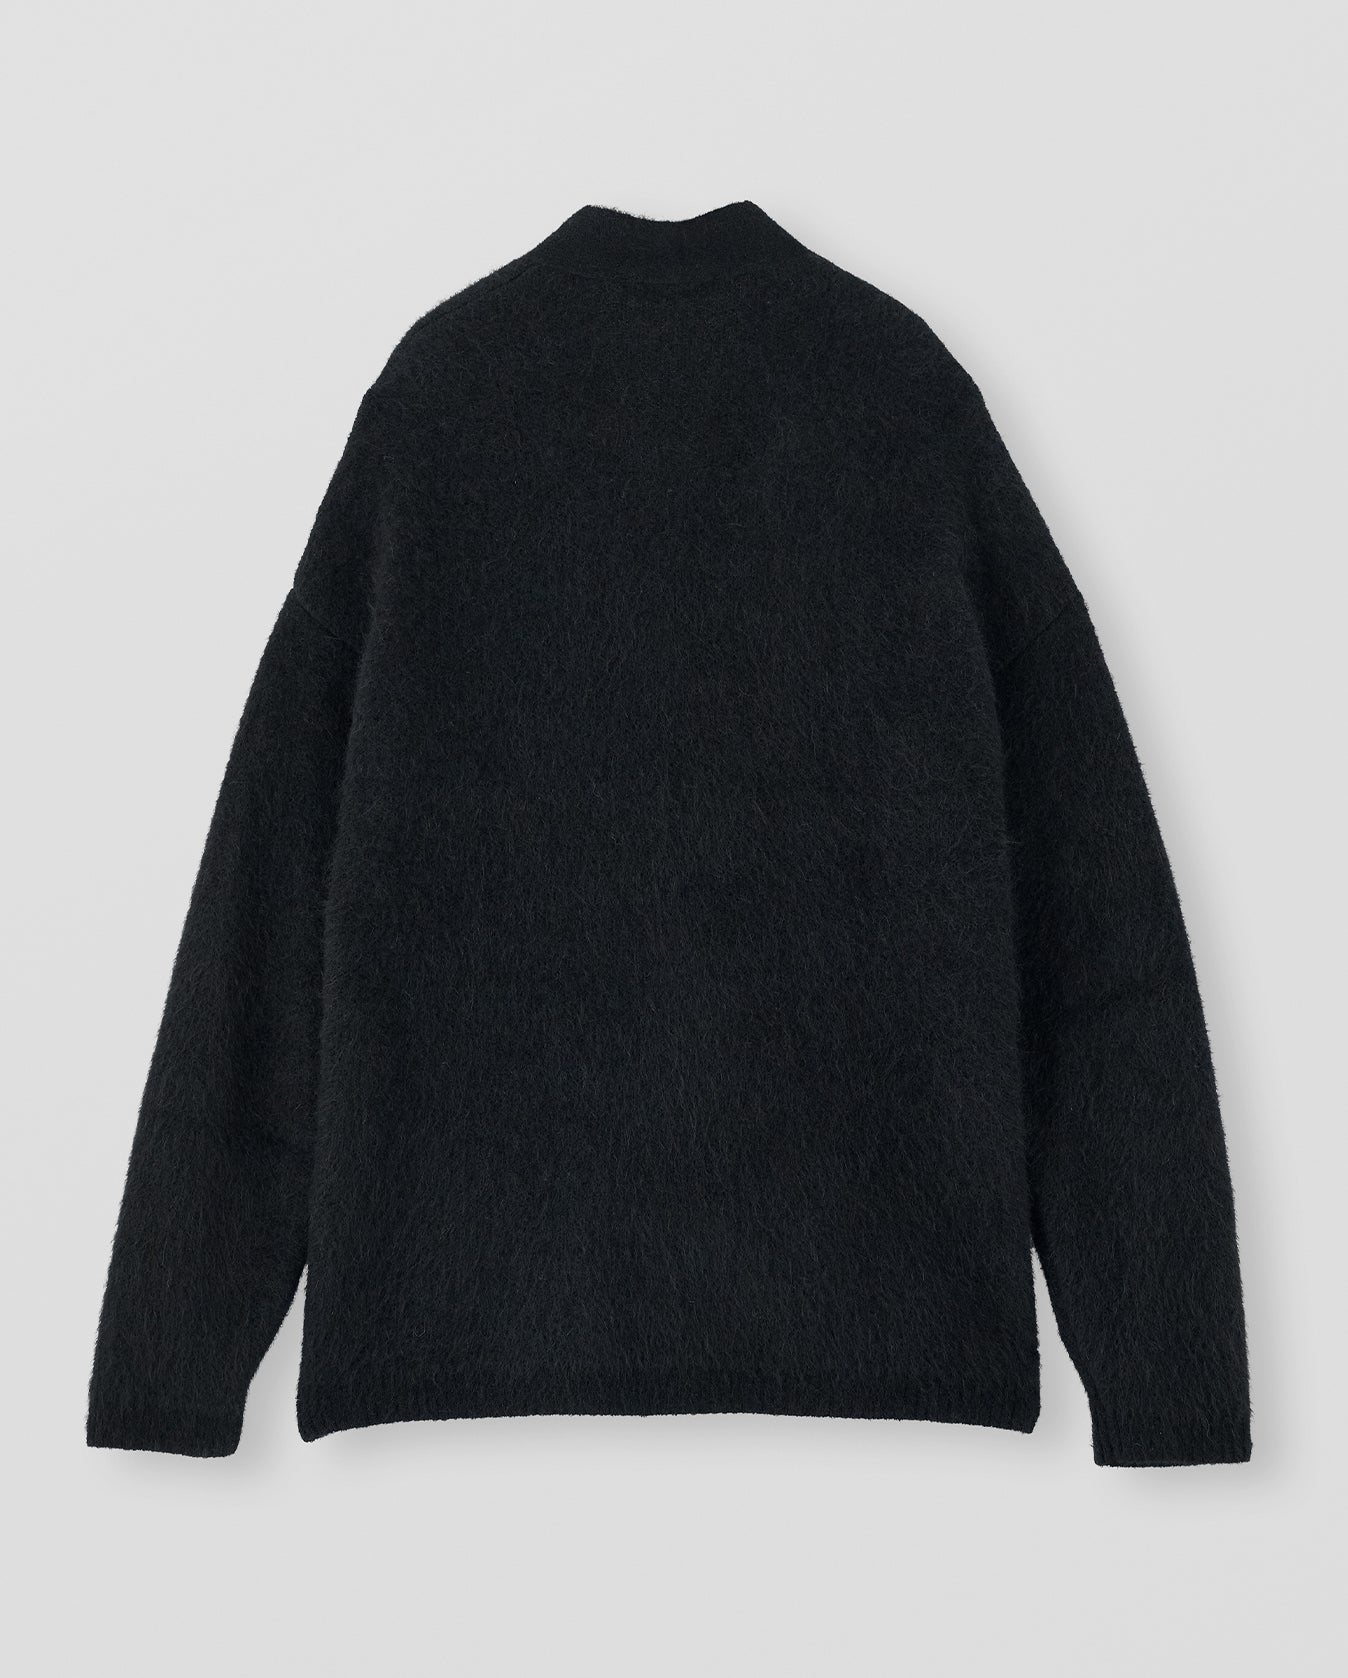 Bare Knitwear Alpaca Harvest Cardigan in Black